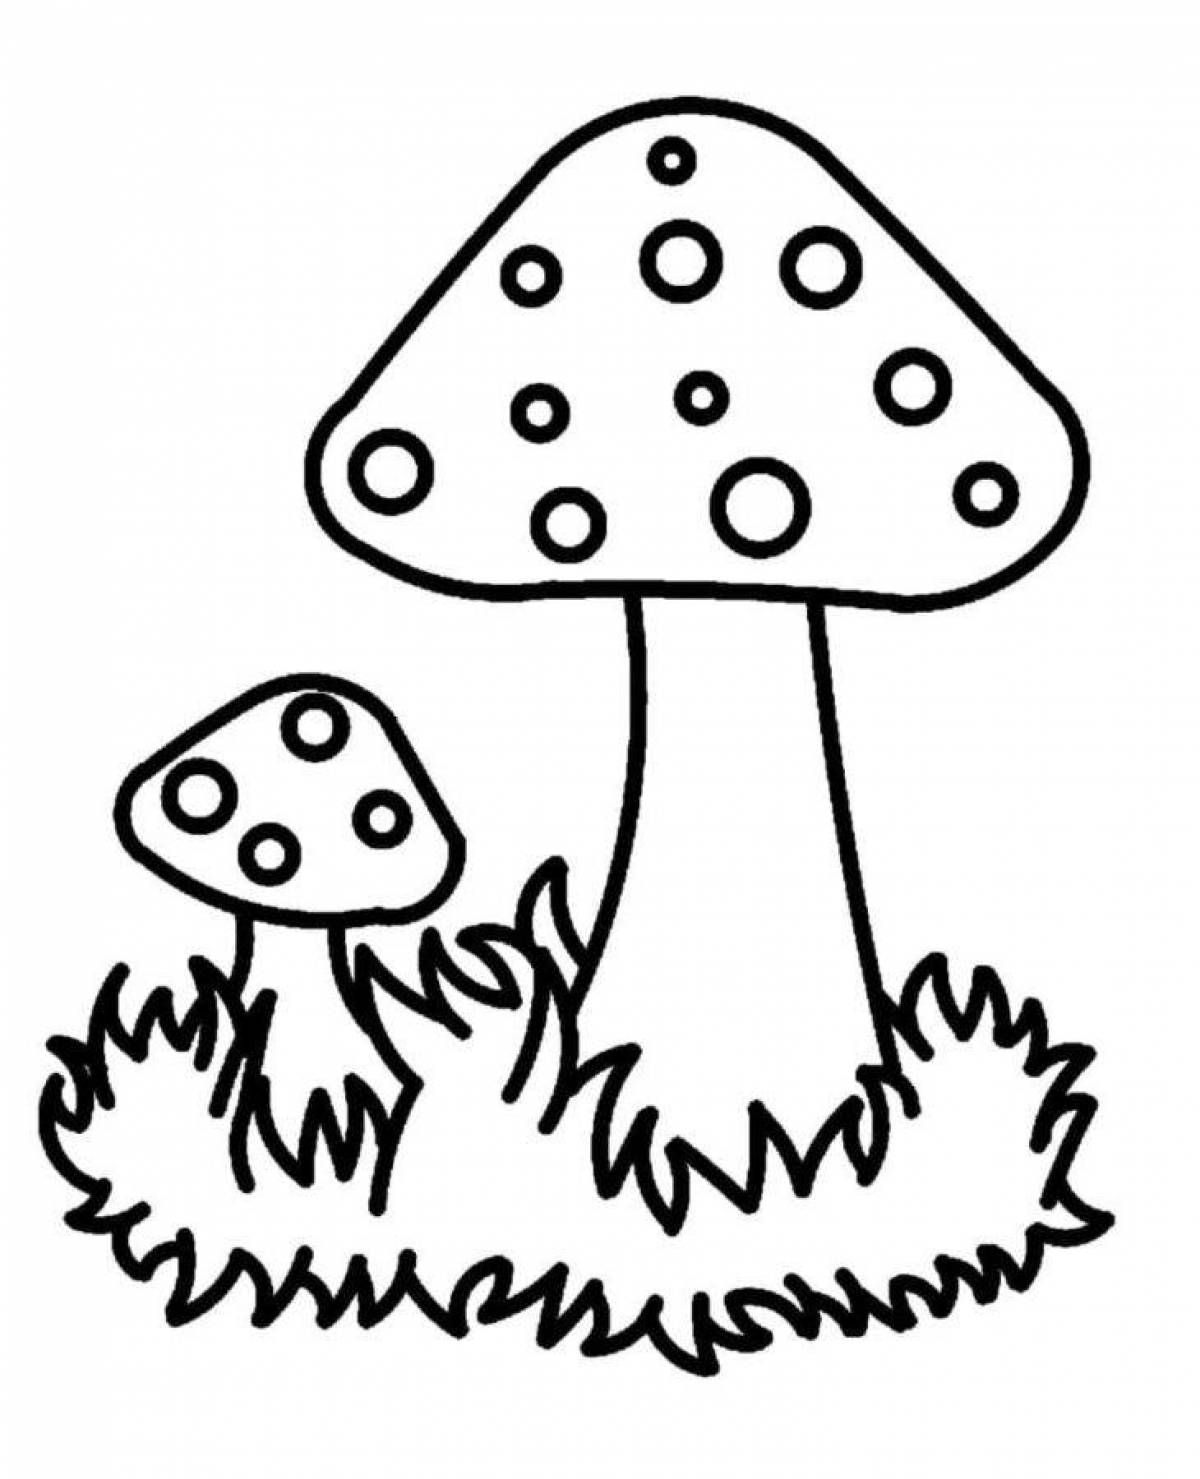 Crazy mushroom coloring page